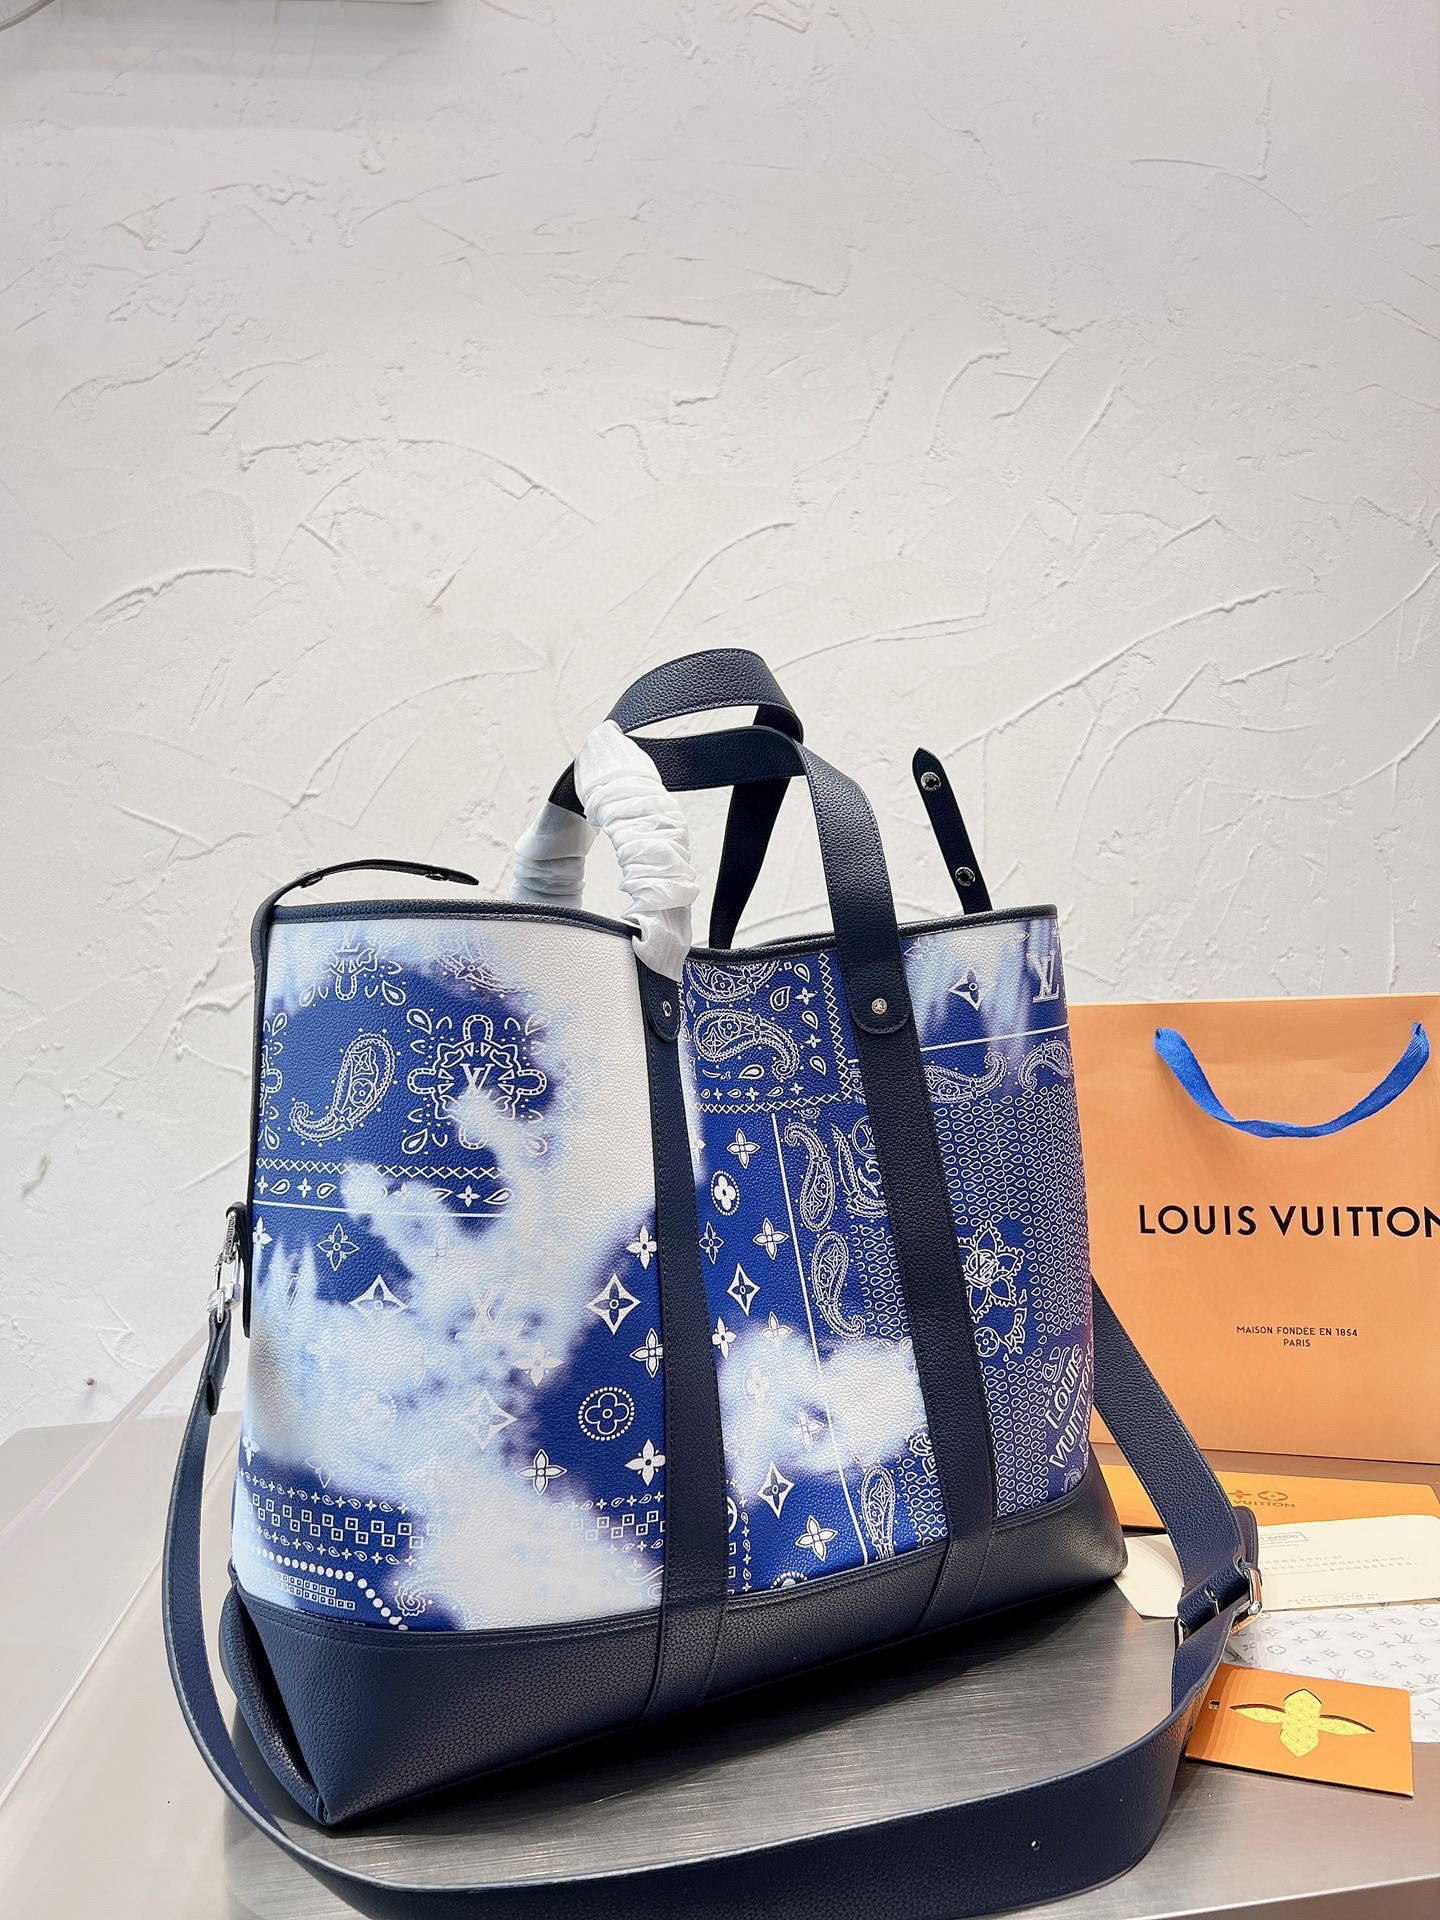 Louis Vuitton Original Leather Tote Journey M20553 Blue and White Porcelain